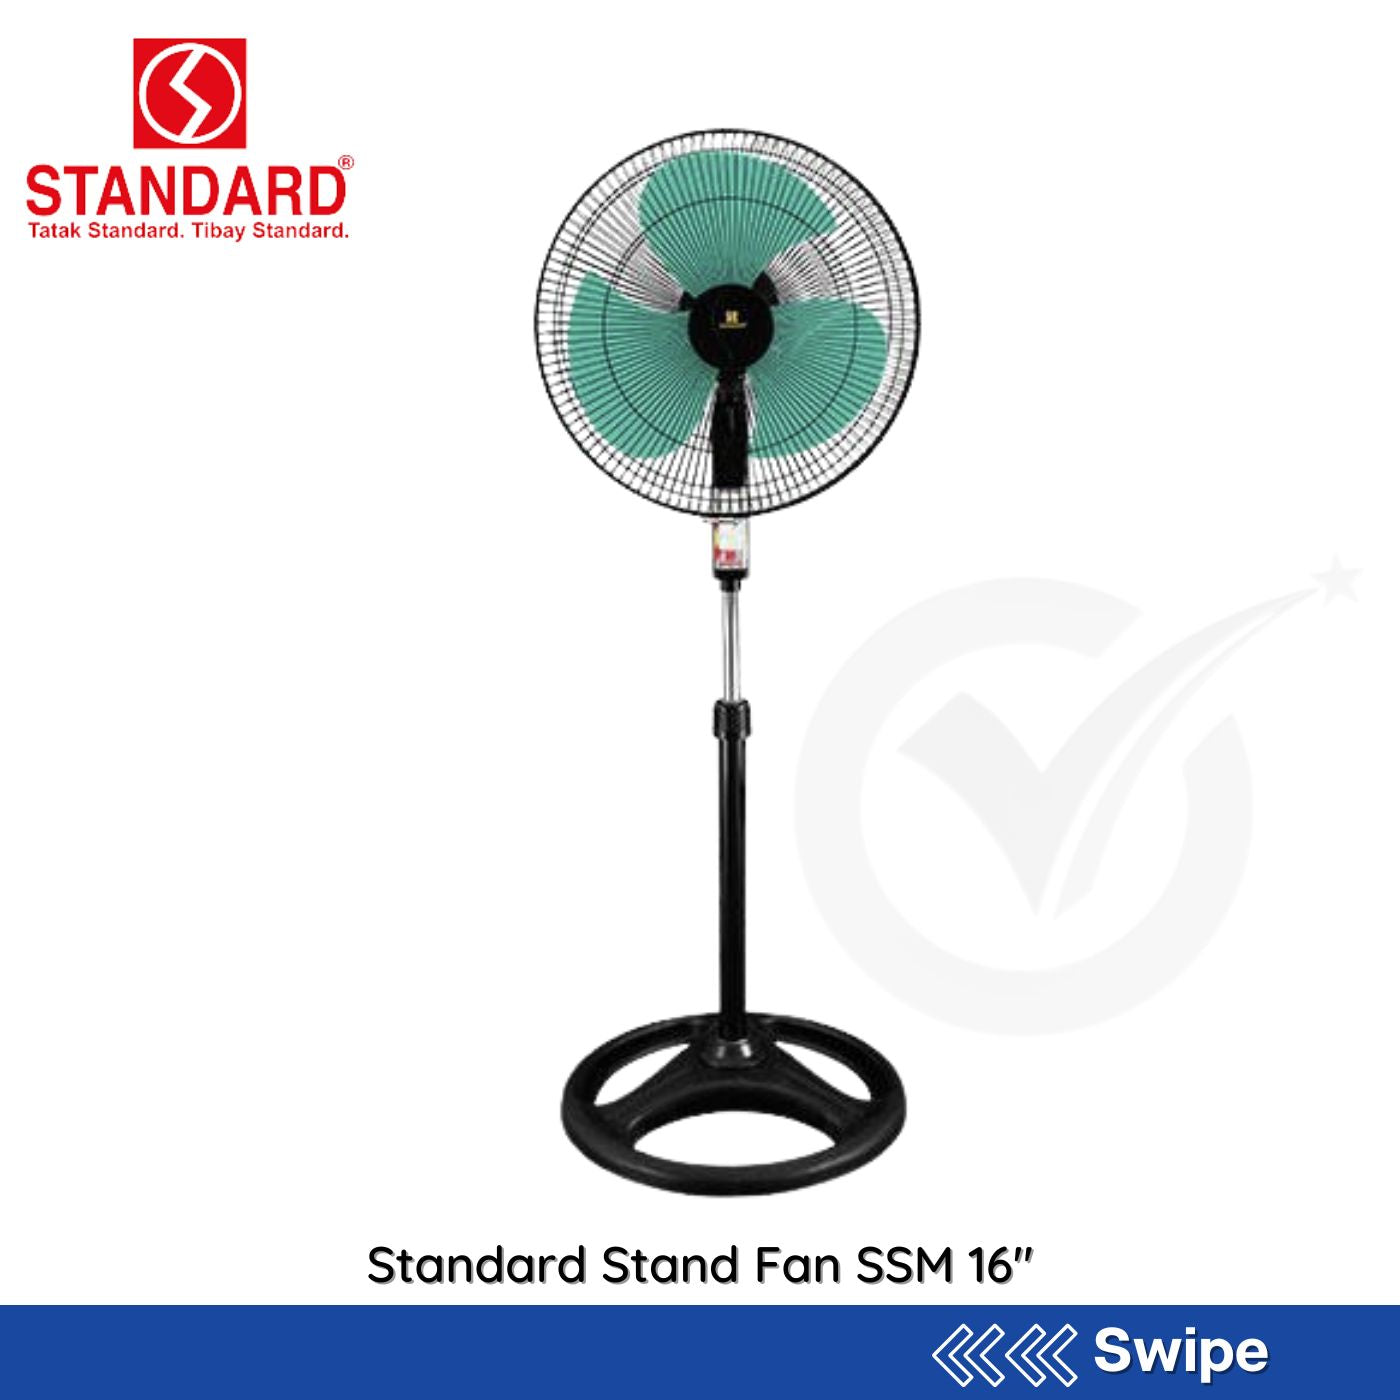 Standard Stand Fan SSM 16